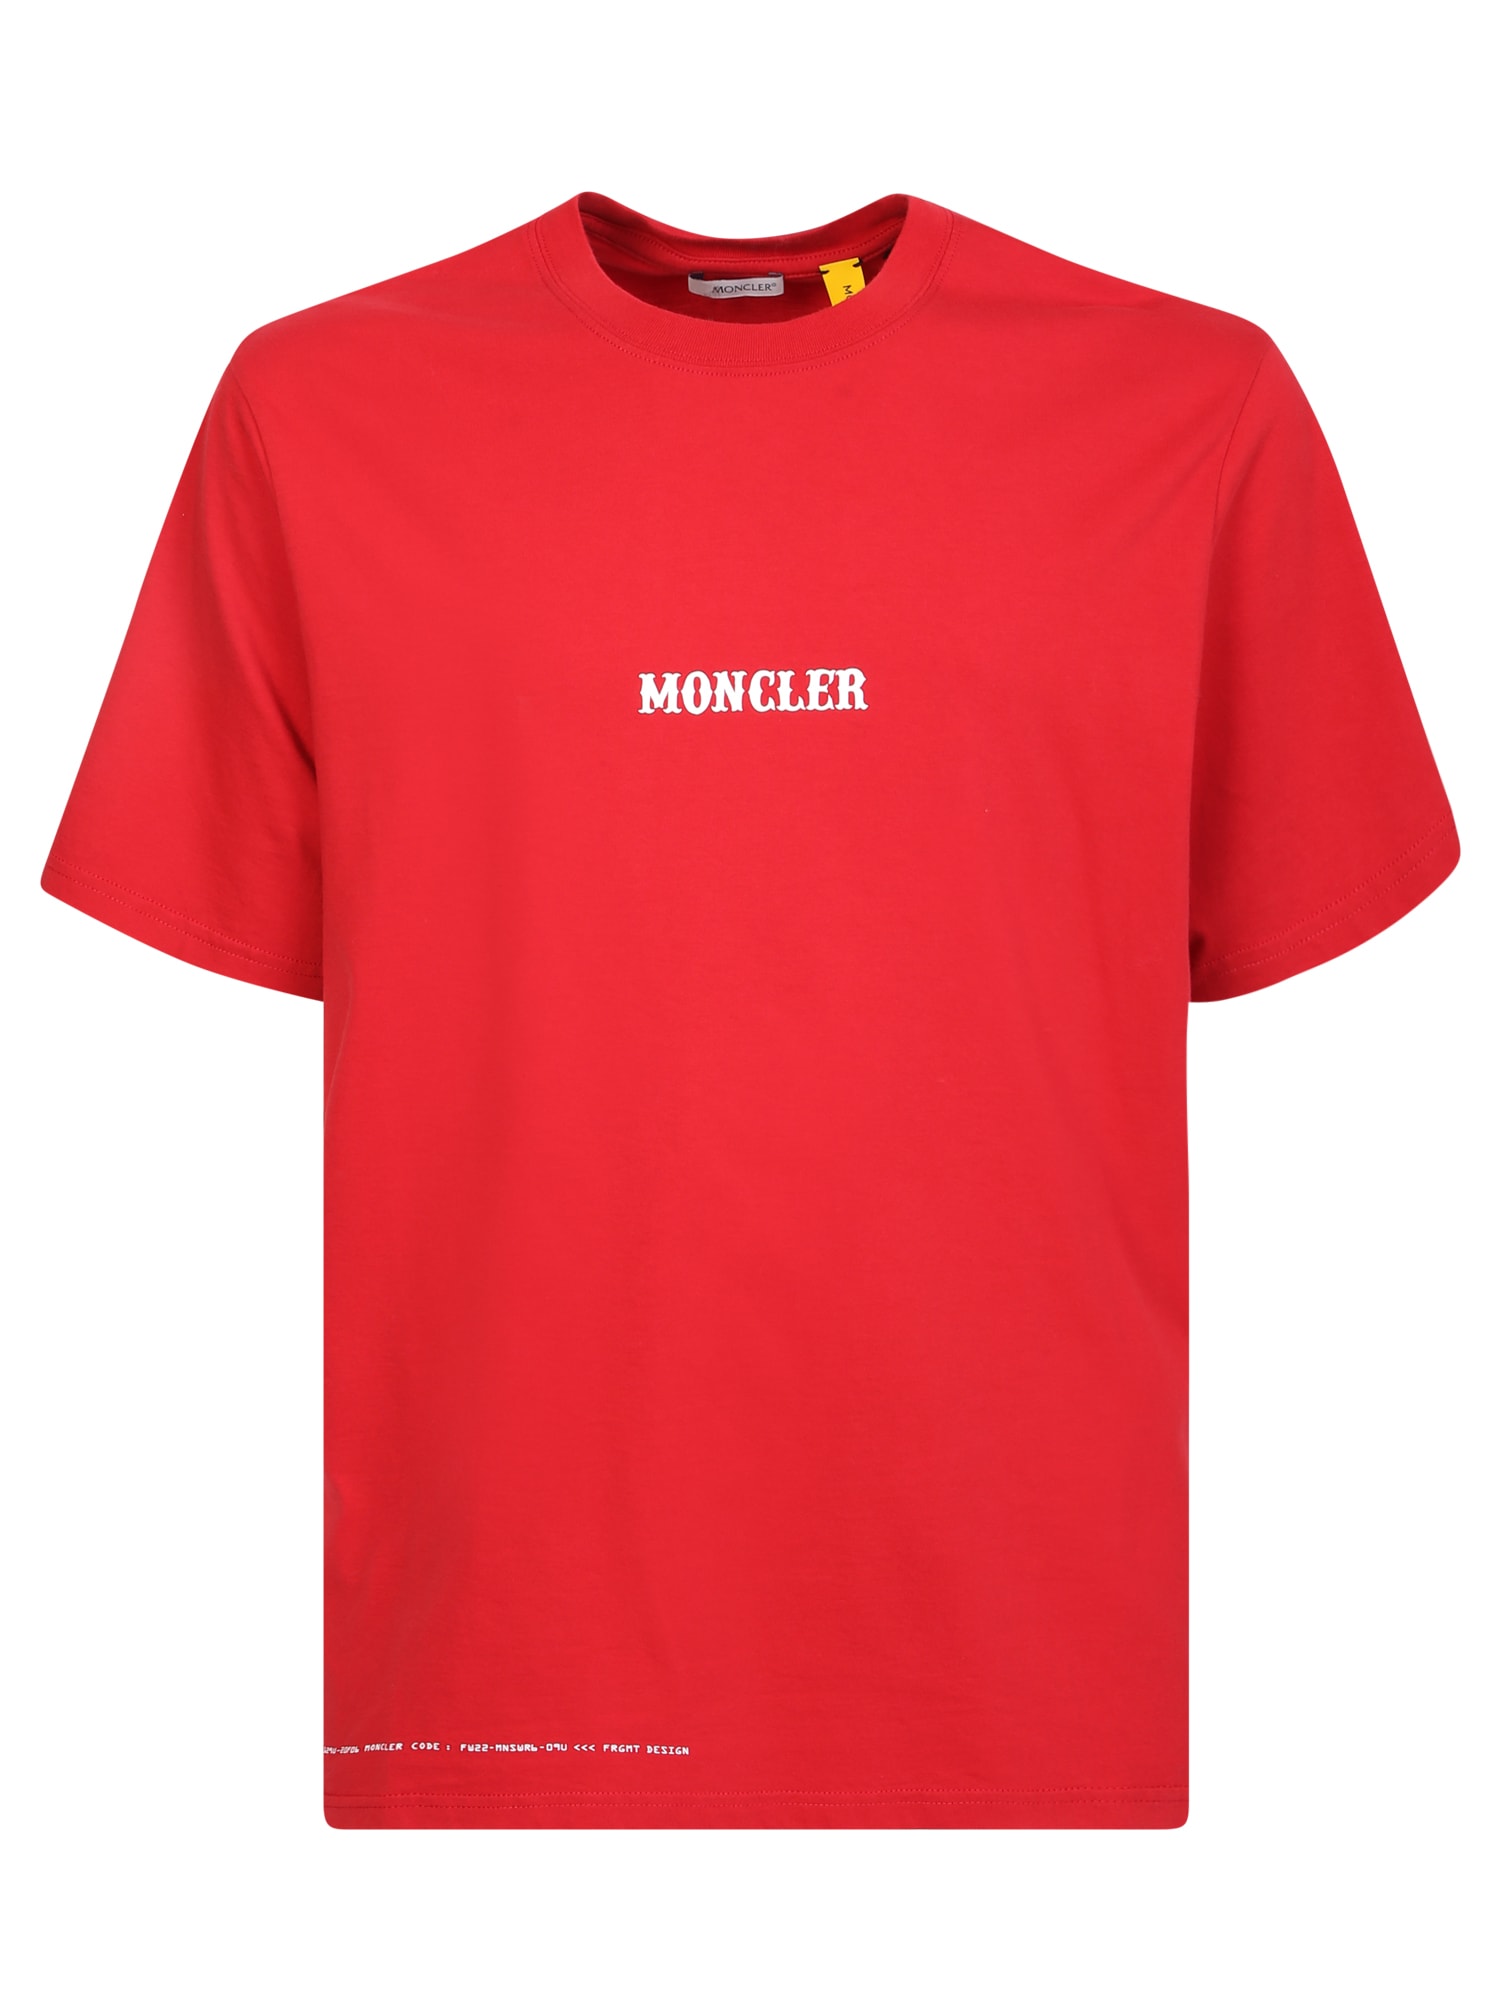 Moncler Genius Printed T-shirt